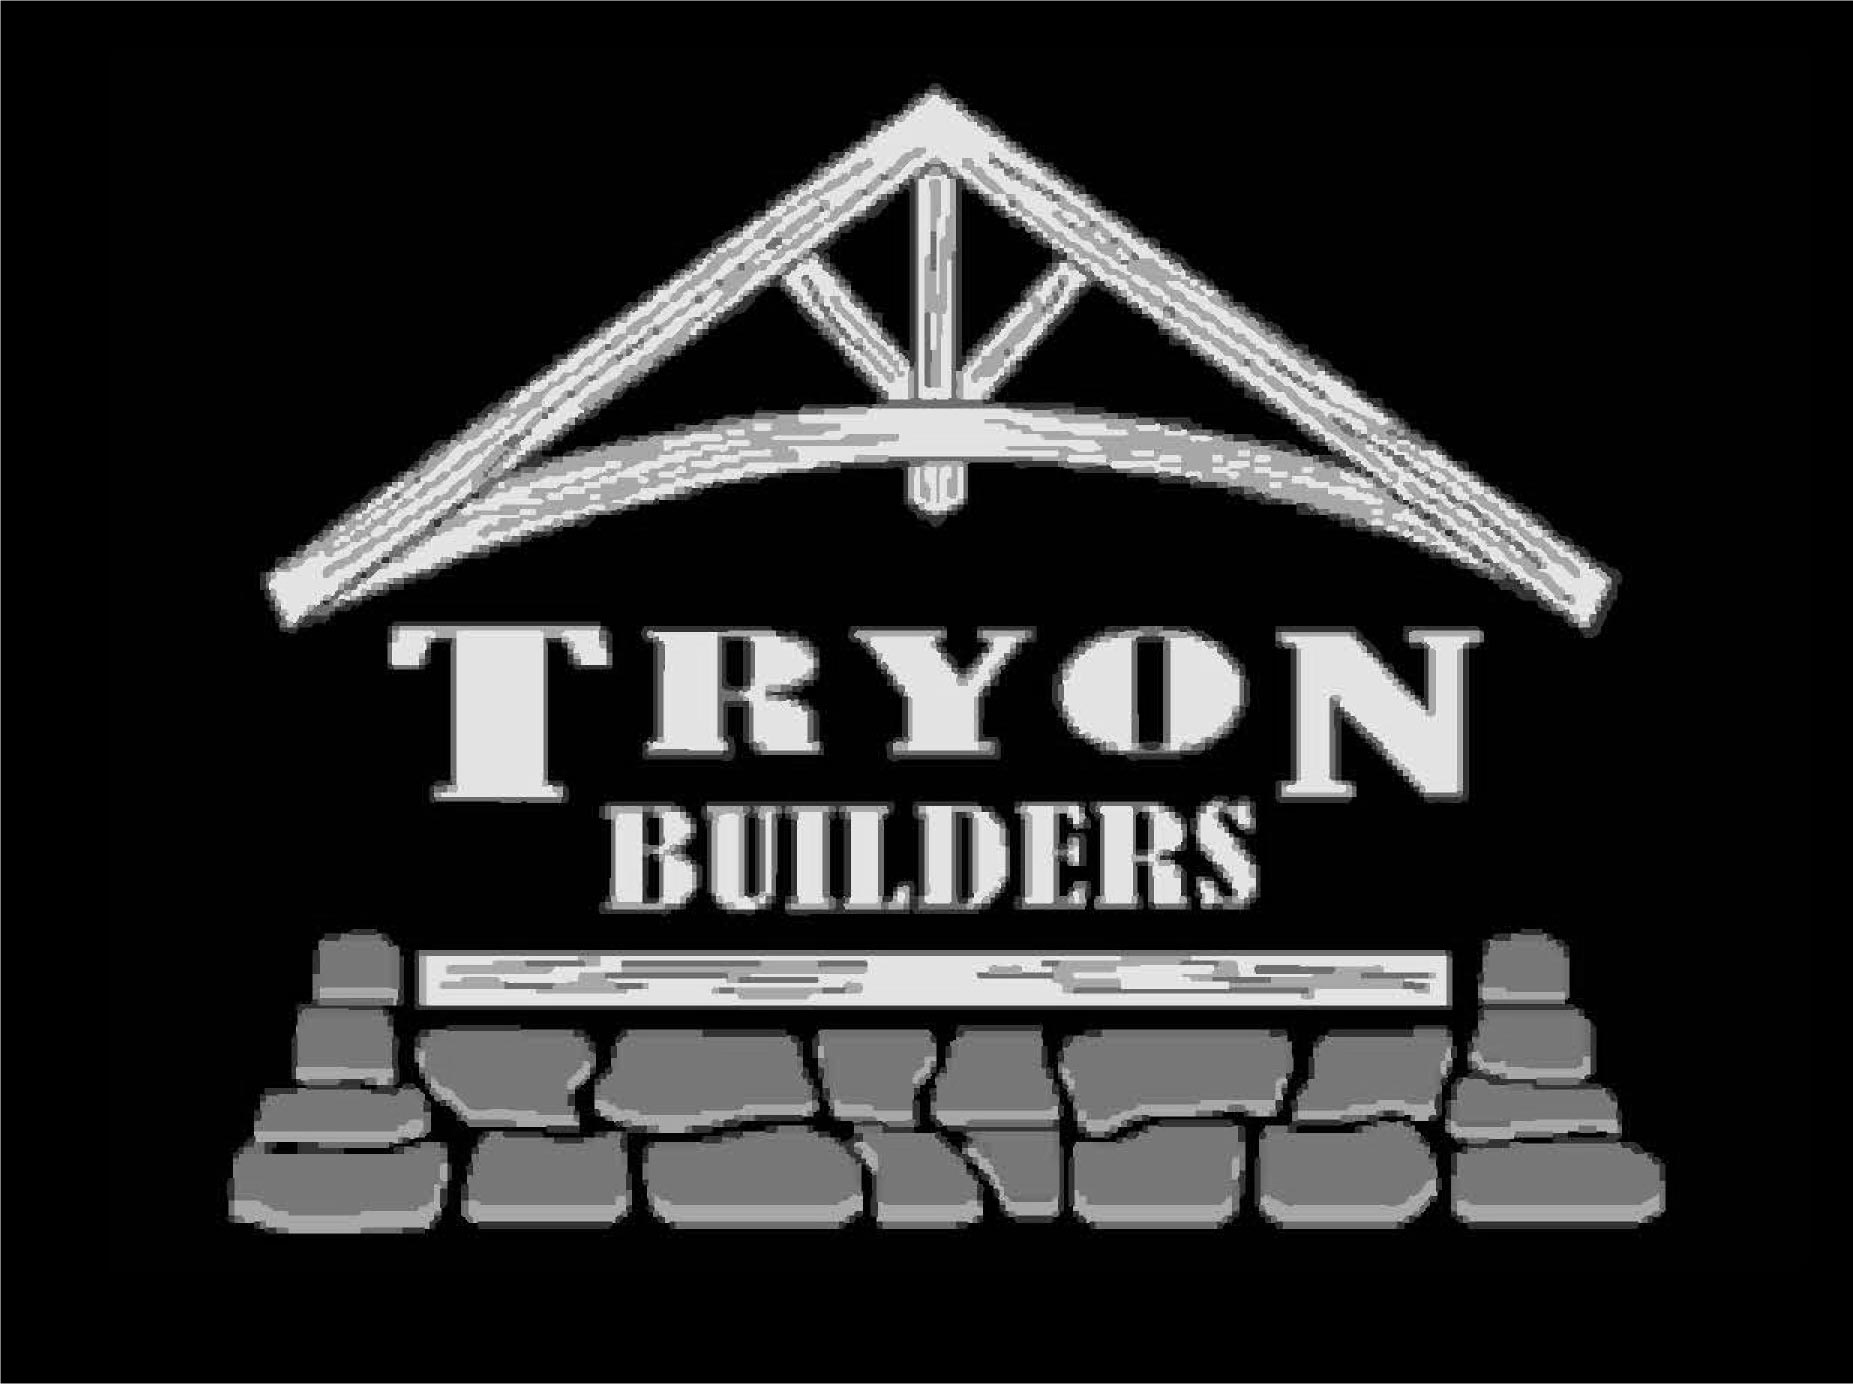 TRYON BUILDERS